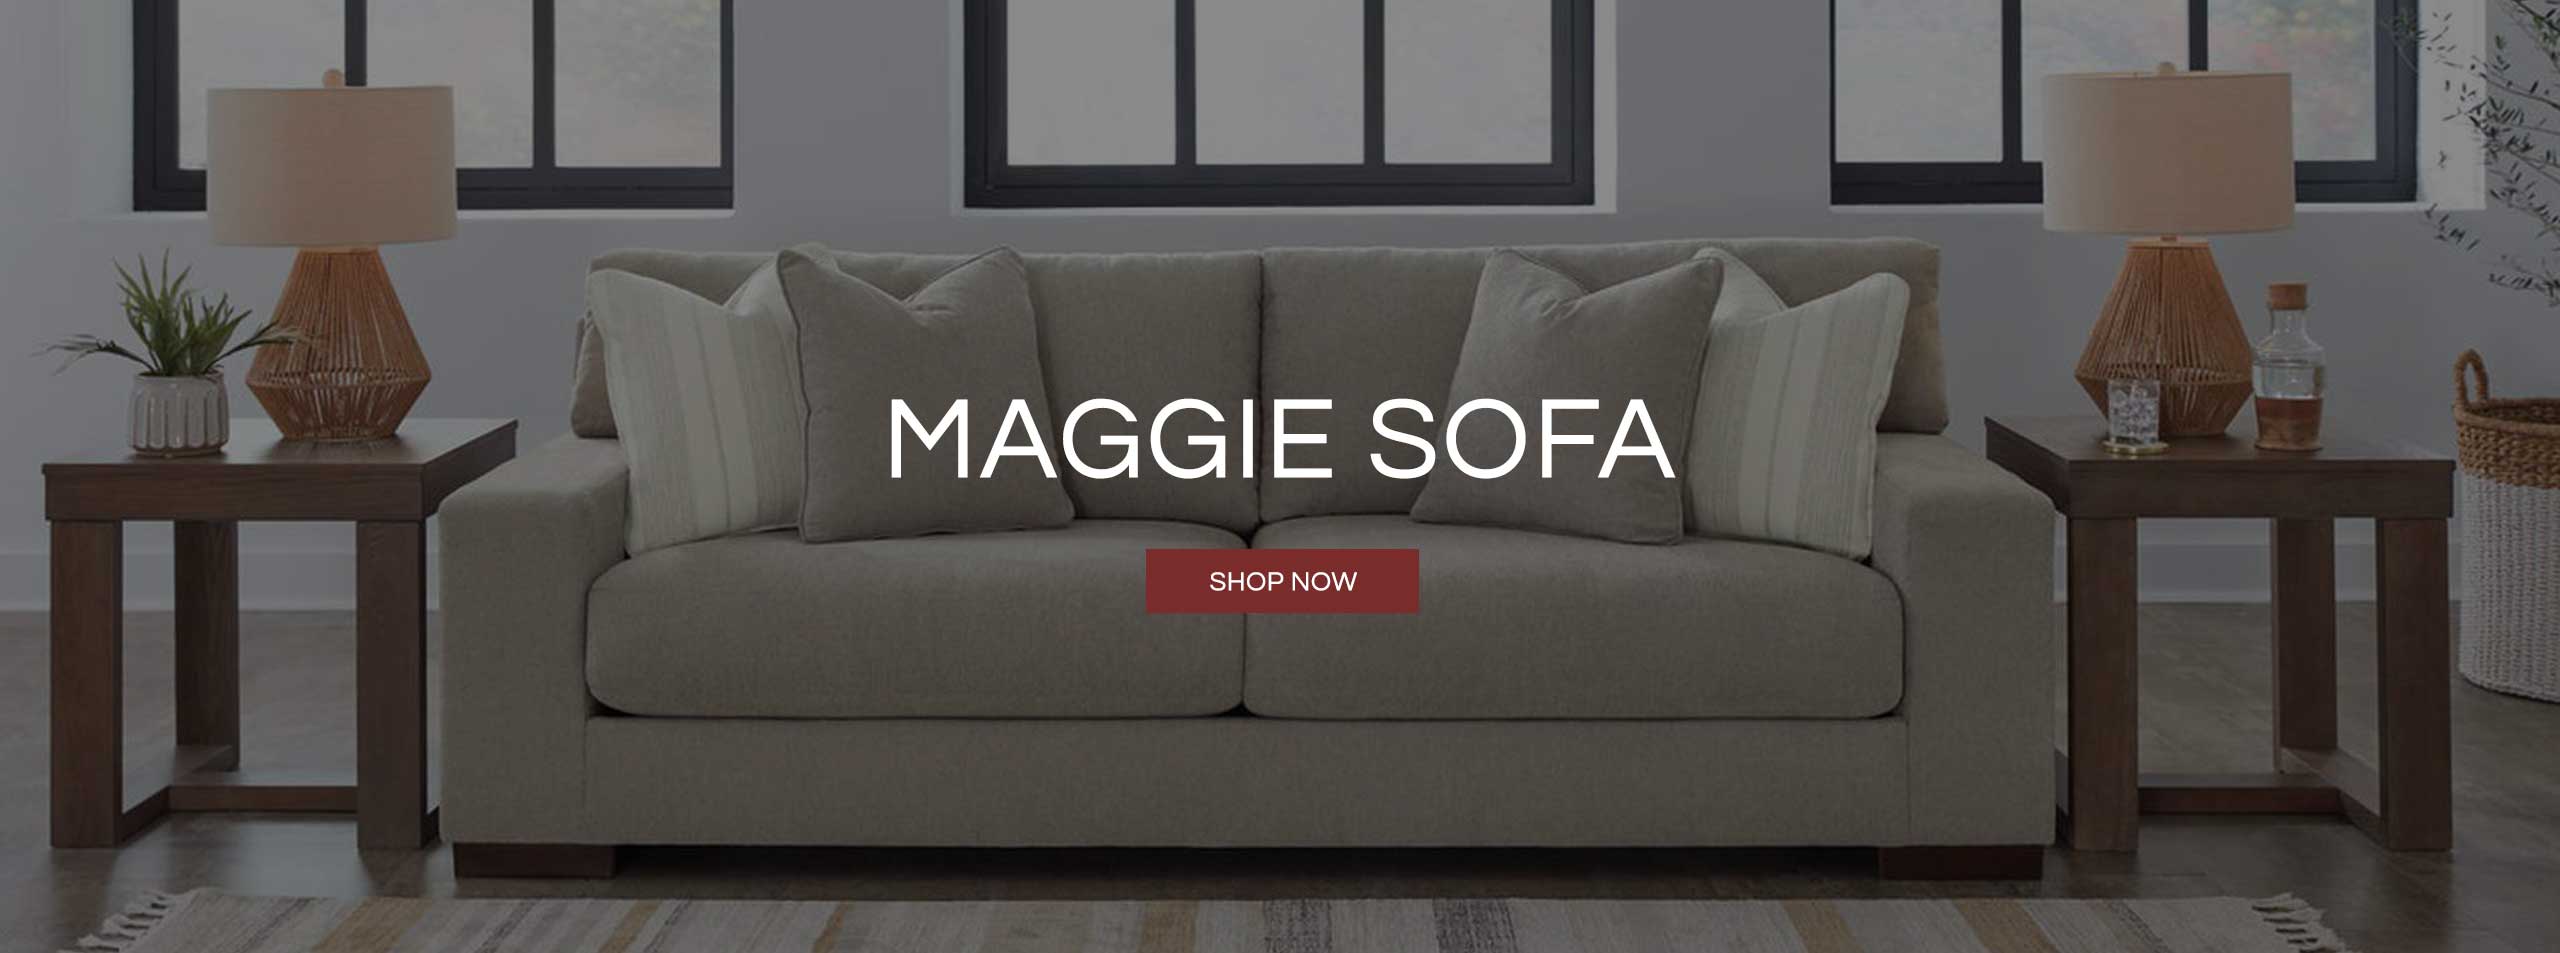 Maggie Sofa - Shop Now